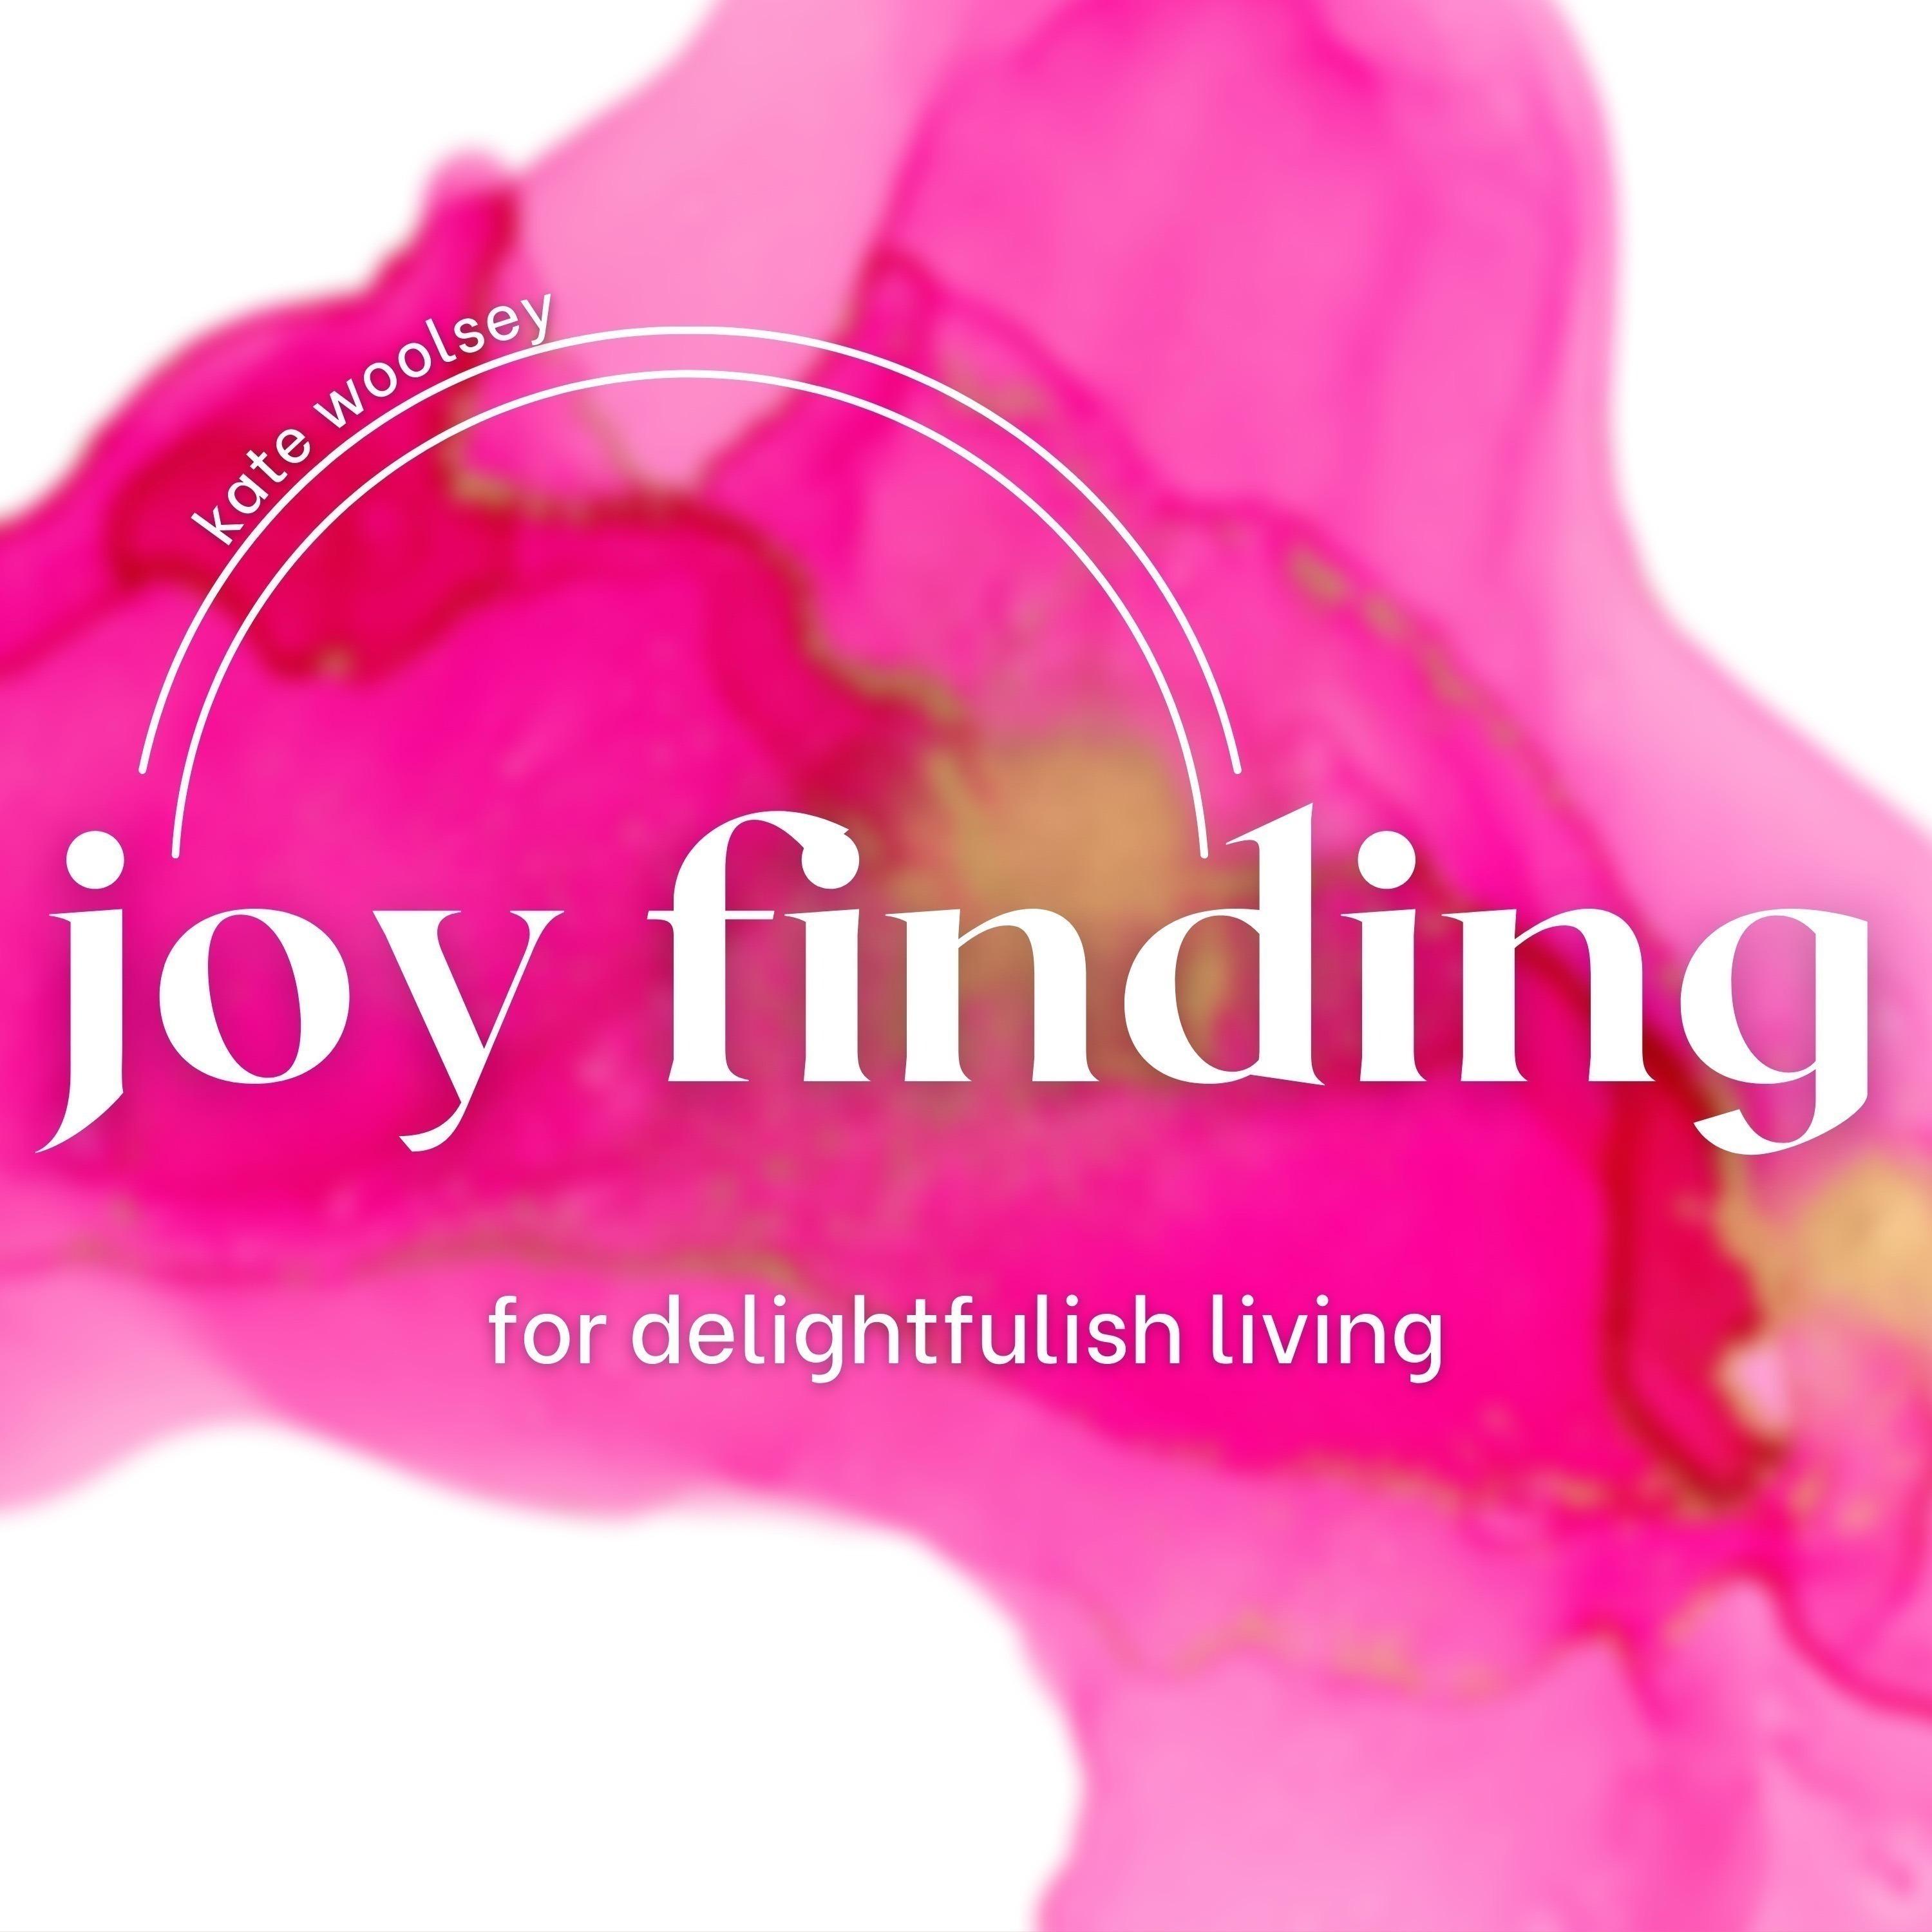 joy finding